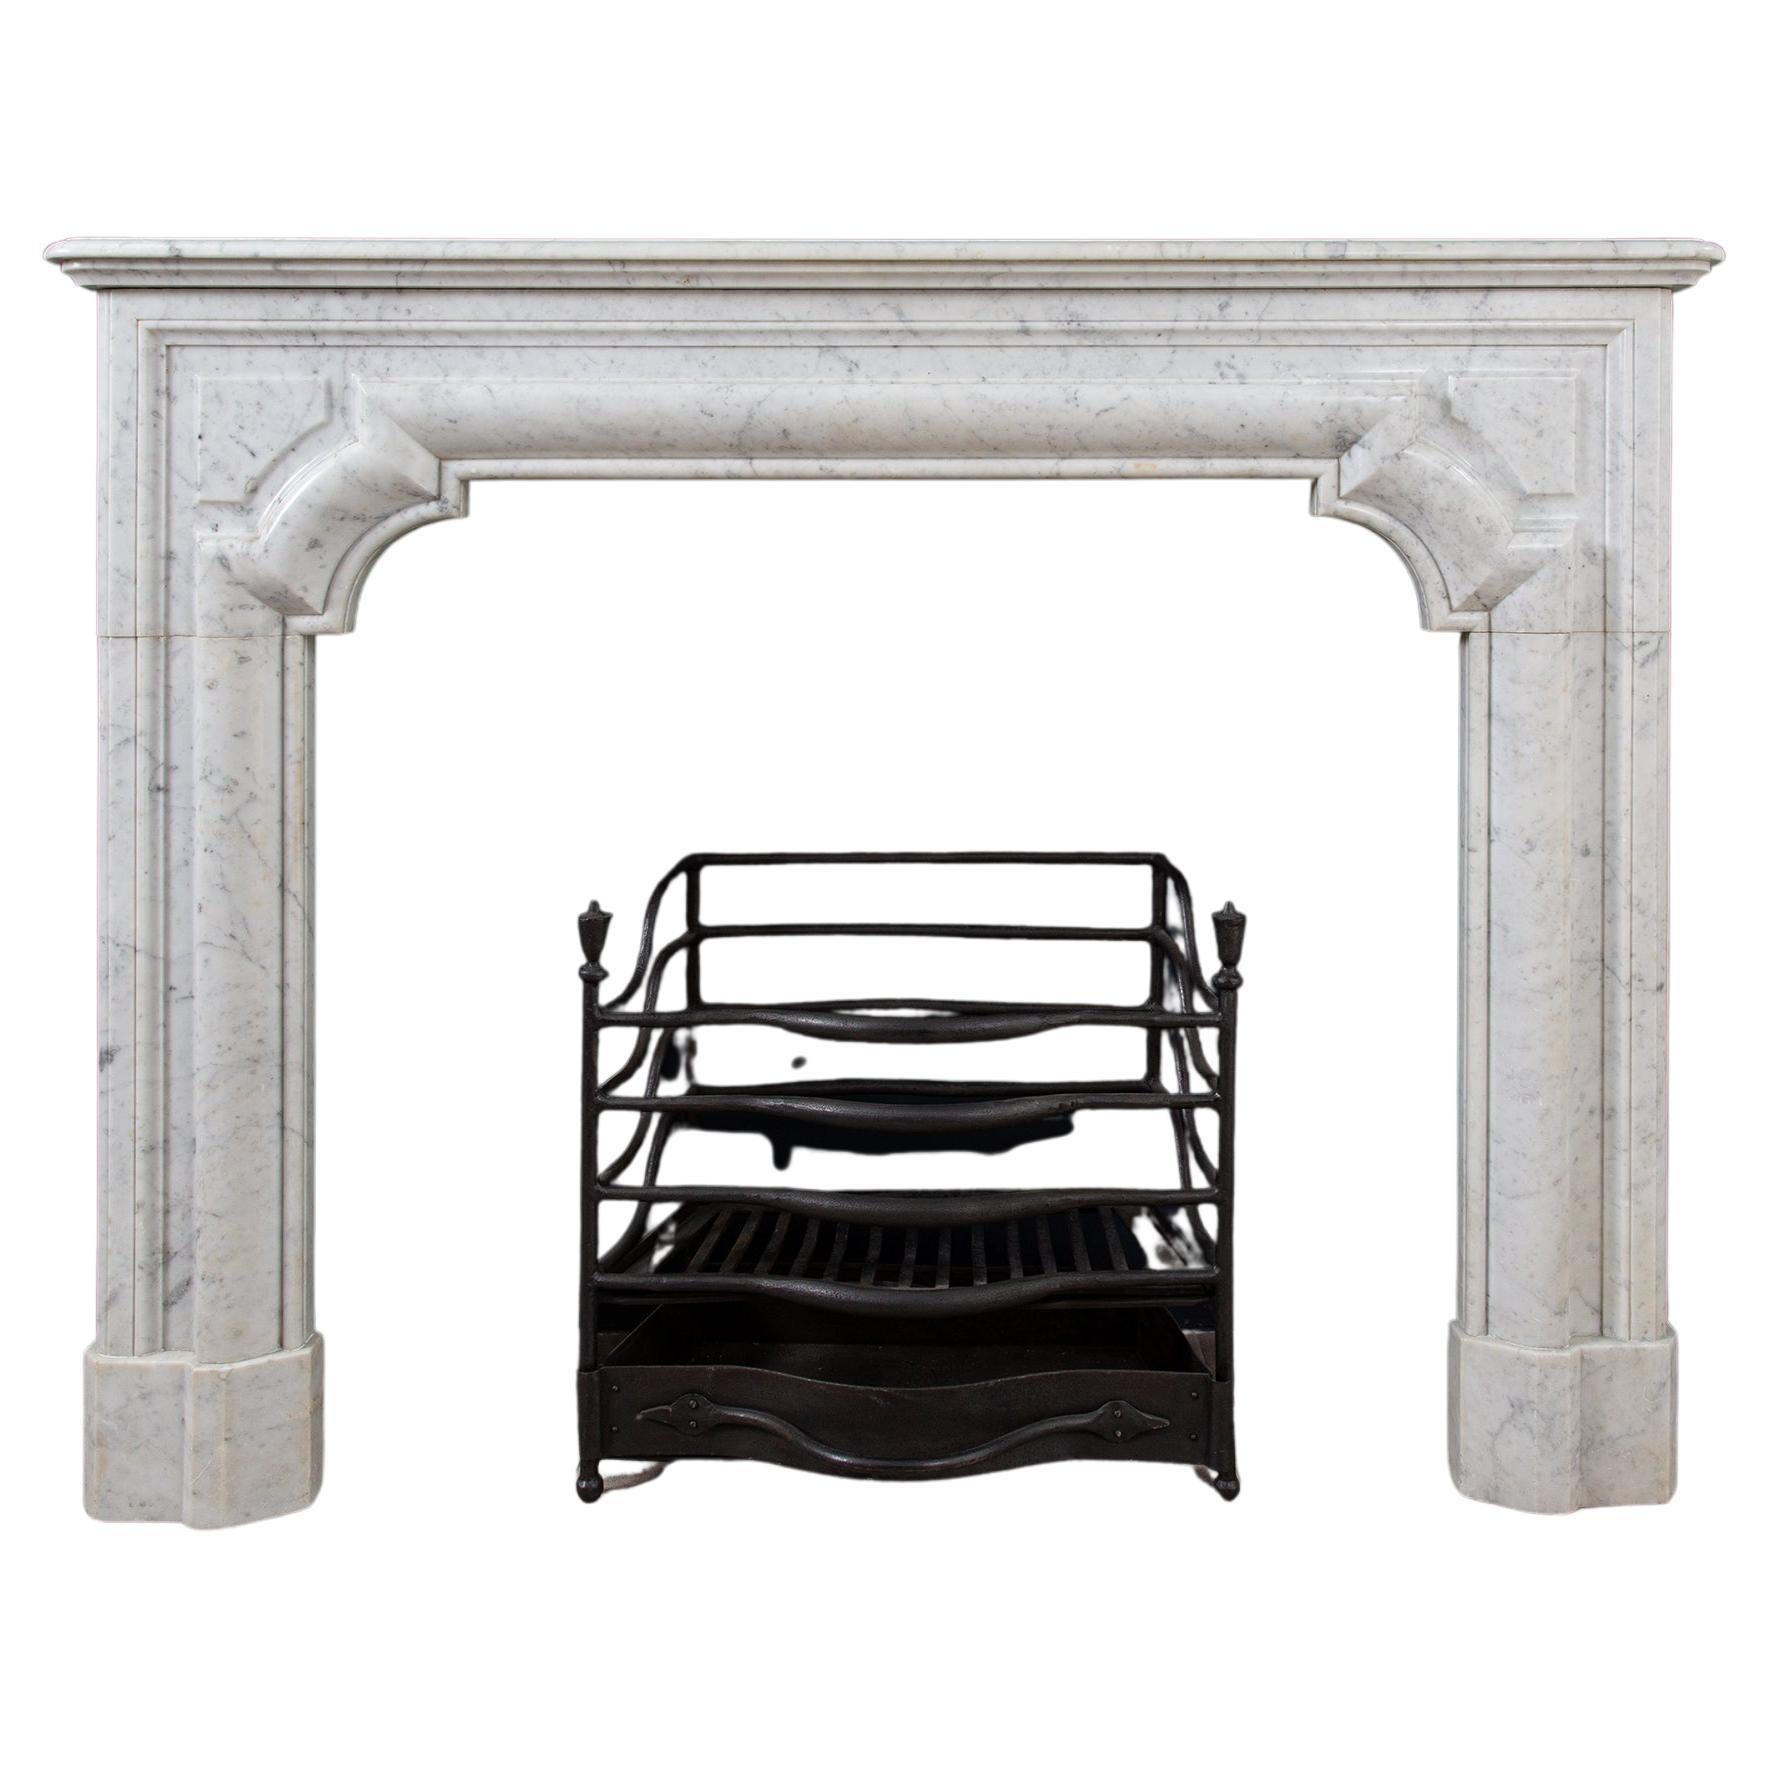 Antique Carrara Marble Lousie XIV Style Bolection Fireplace Surround For Sale